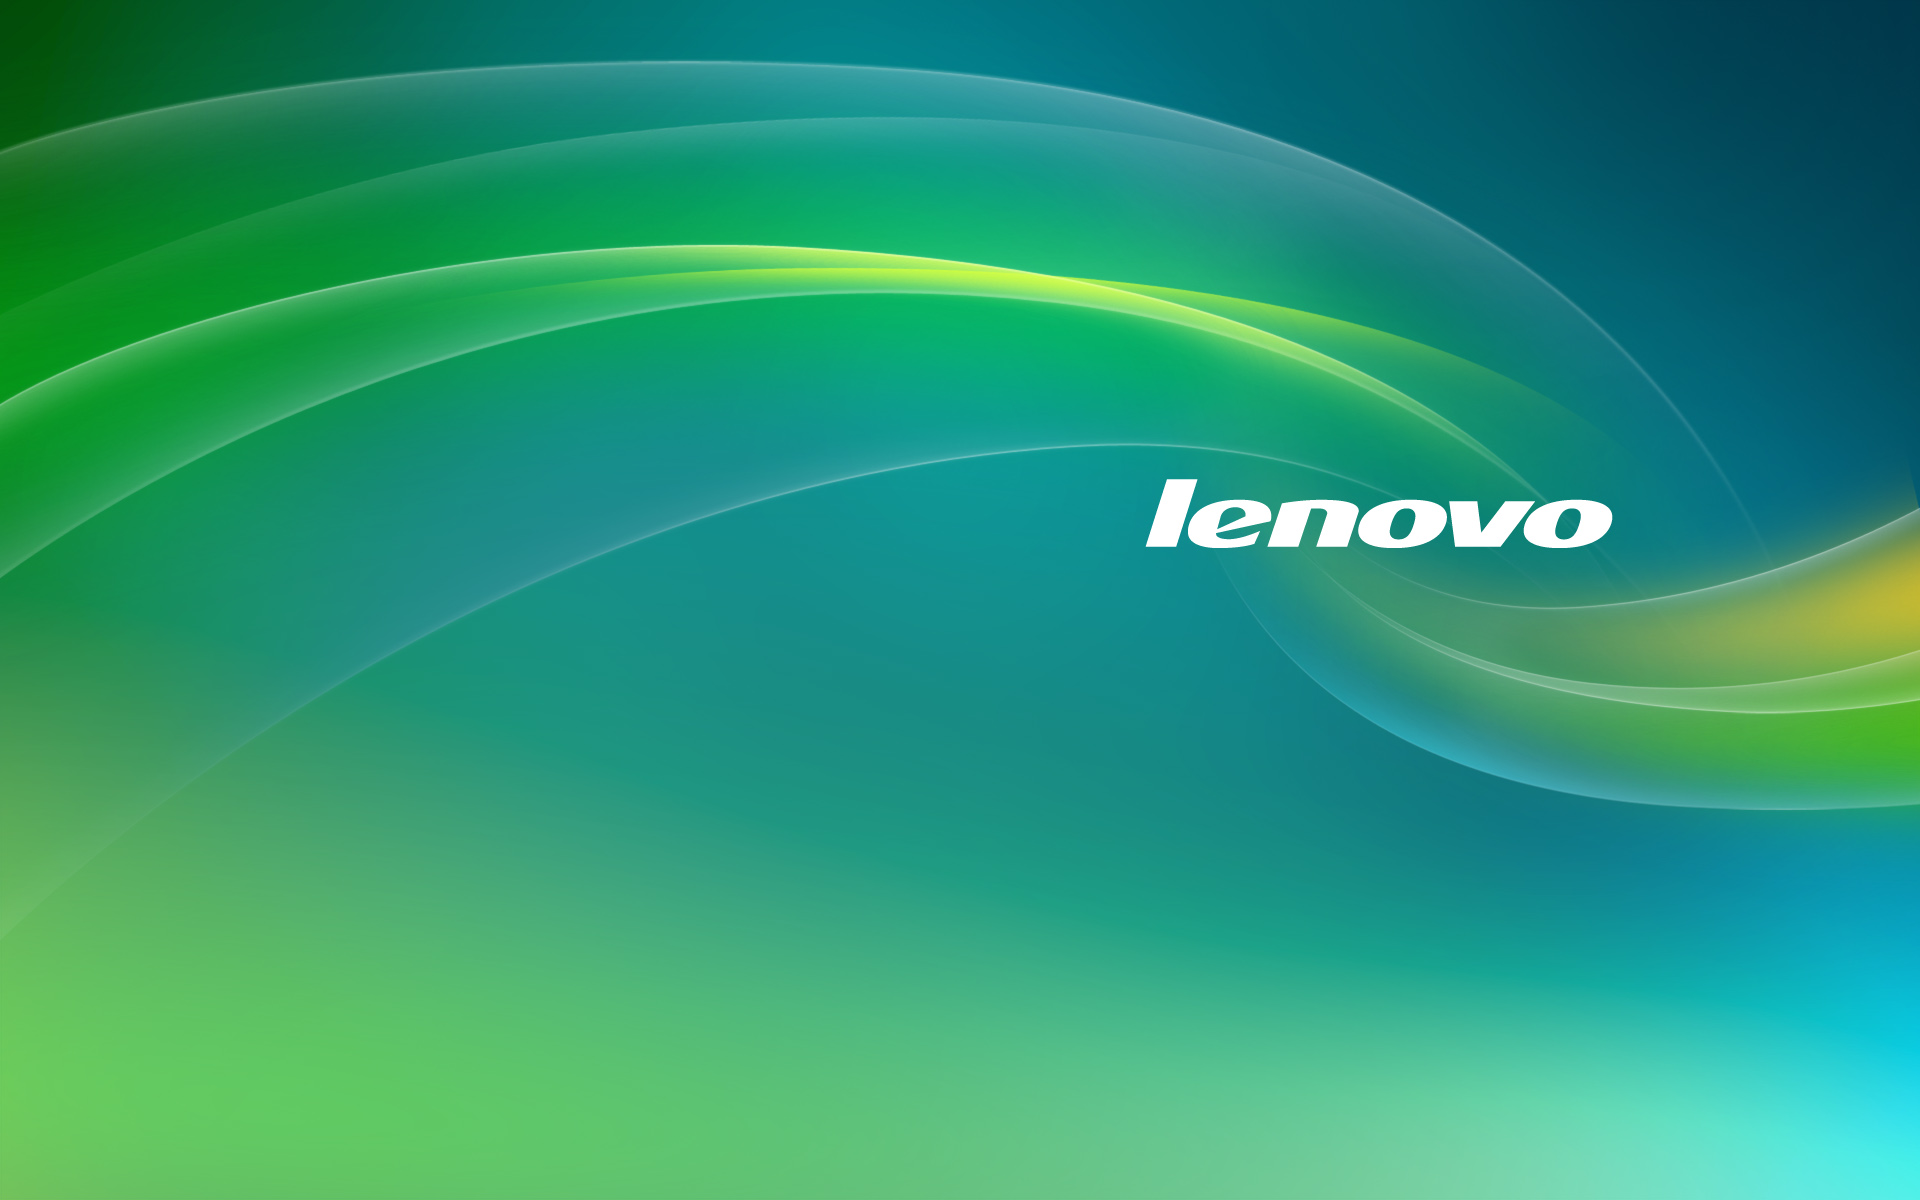 Lenovo Wallpaper Windows 10 - 1920x1200 Wallpaper 